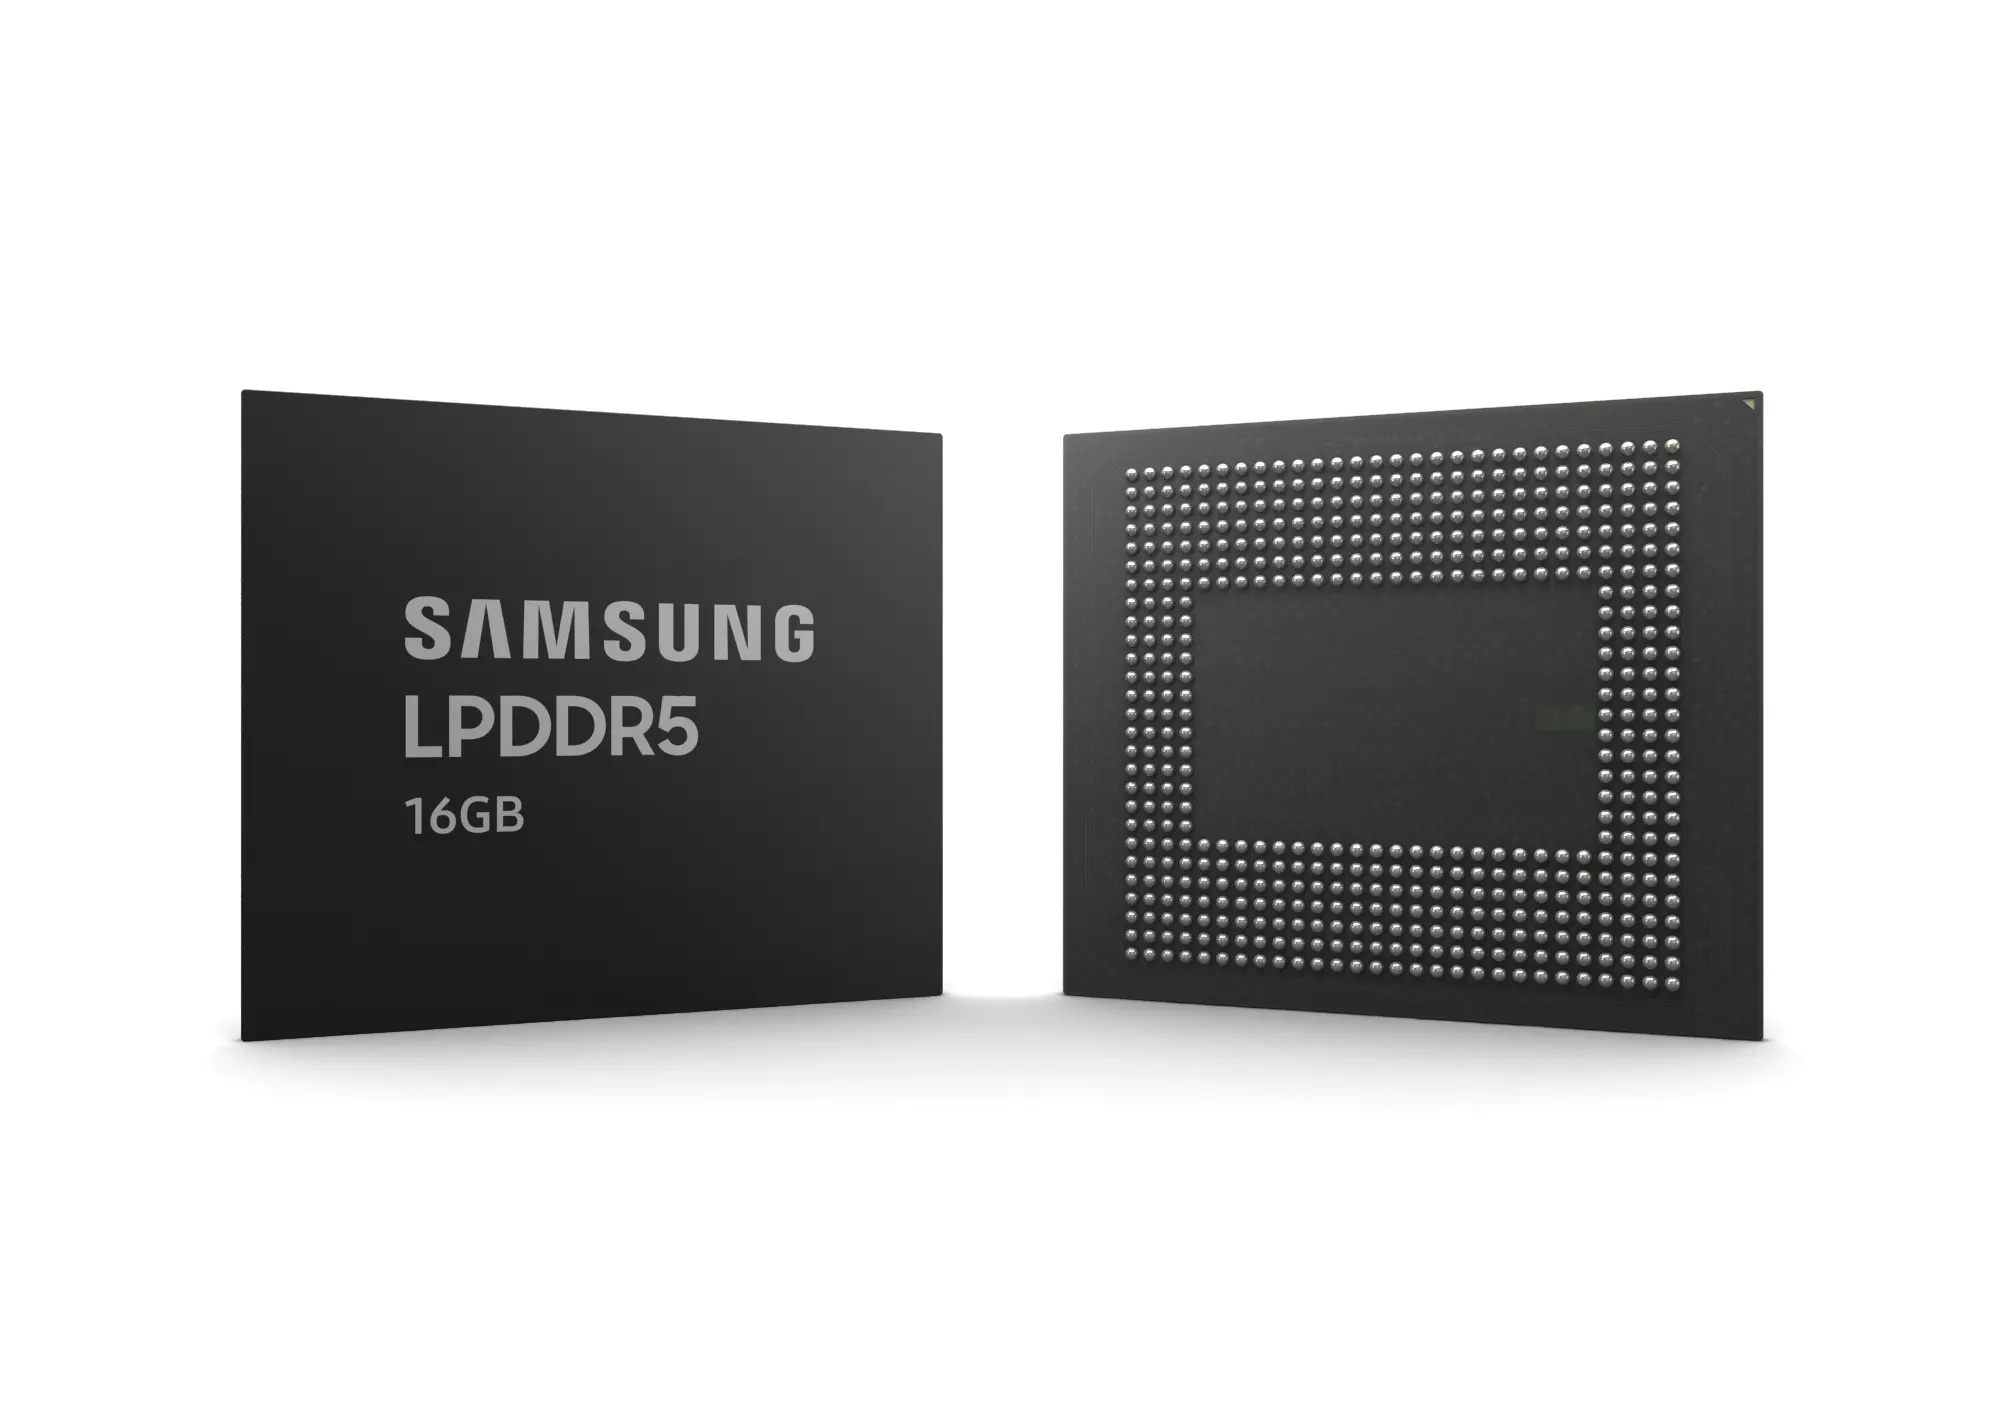 16 Gb-es LPDDR5 memóriamodult kezdett gyártani a Samsung